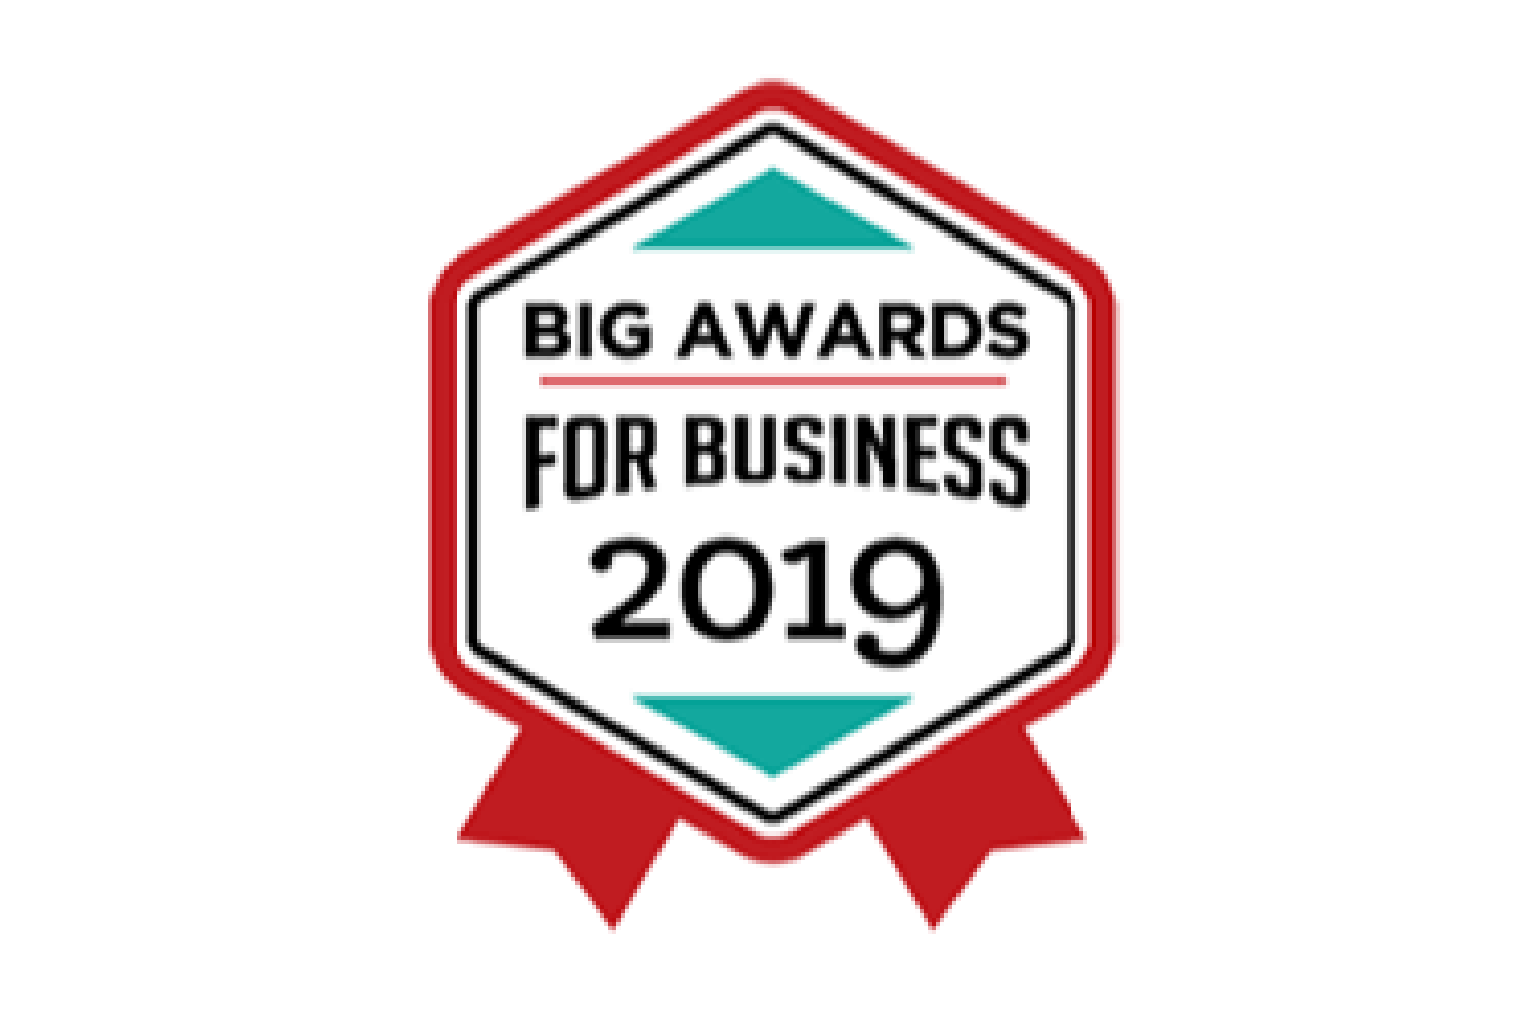 Big Awards For Business 2019